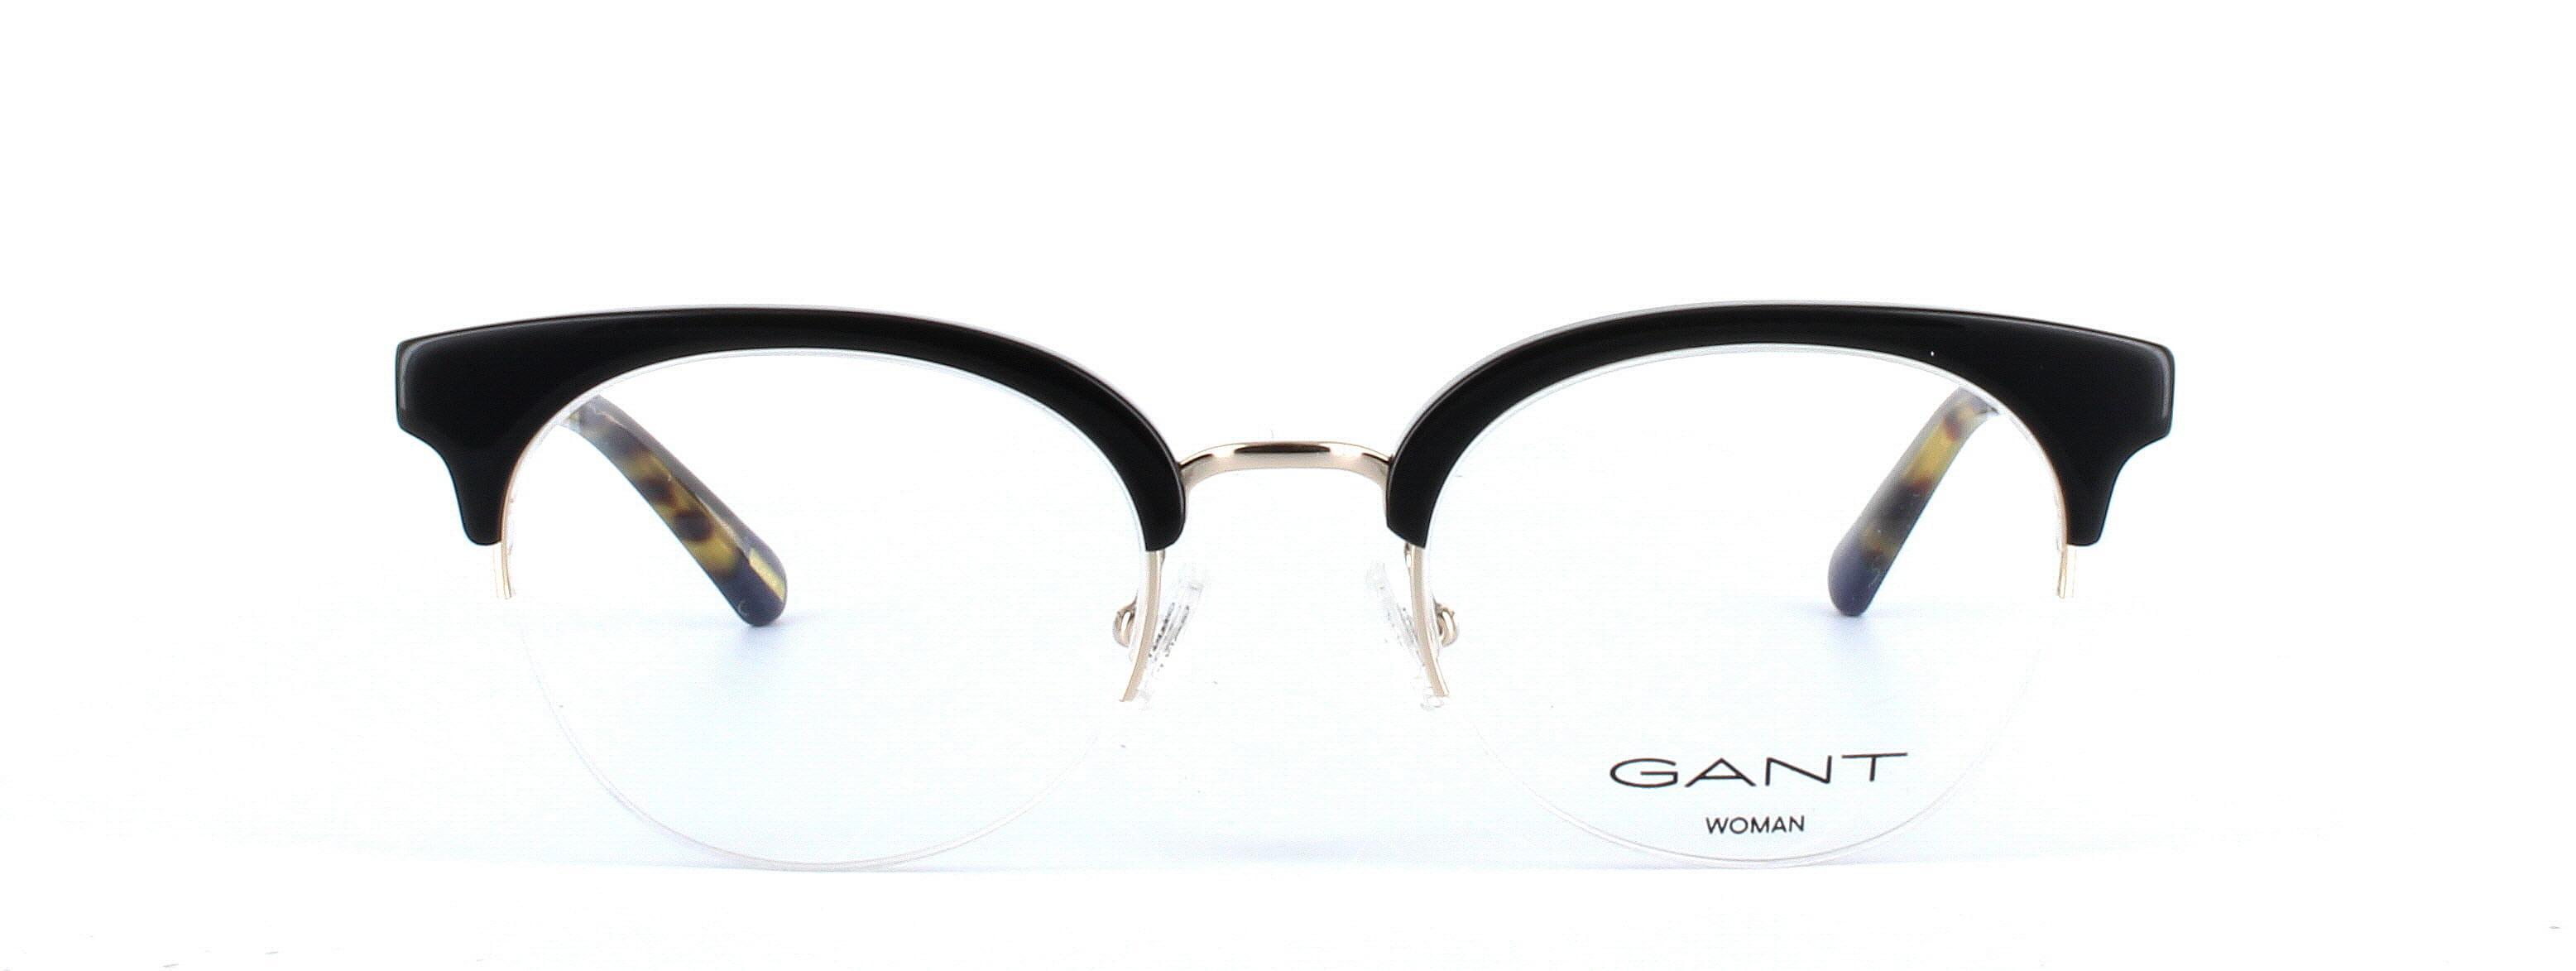 GANT (4085-001) Black Semi Rimless Round Acetate Glasses - Image View 5